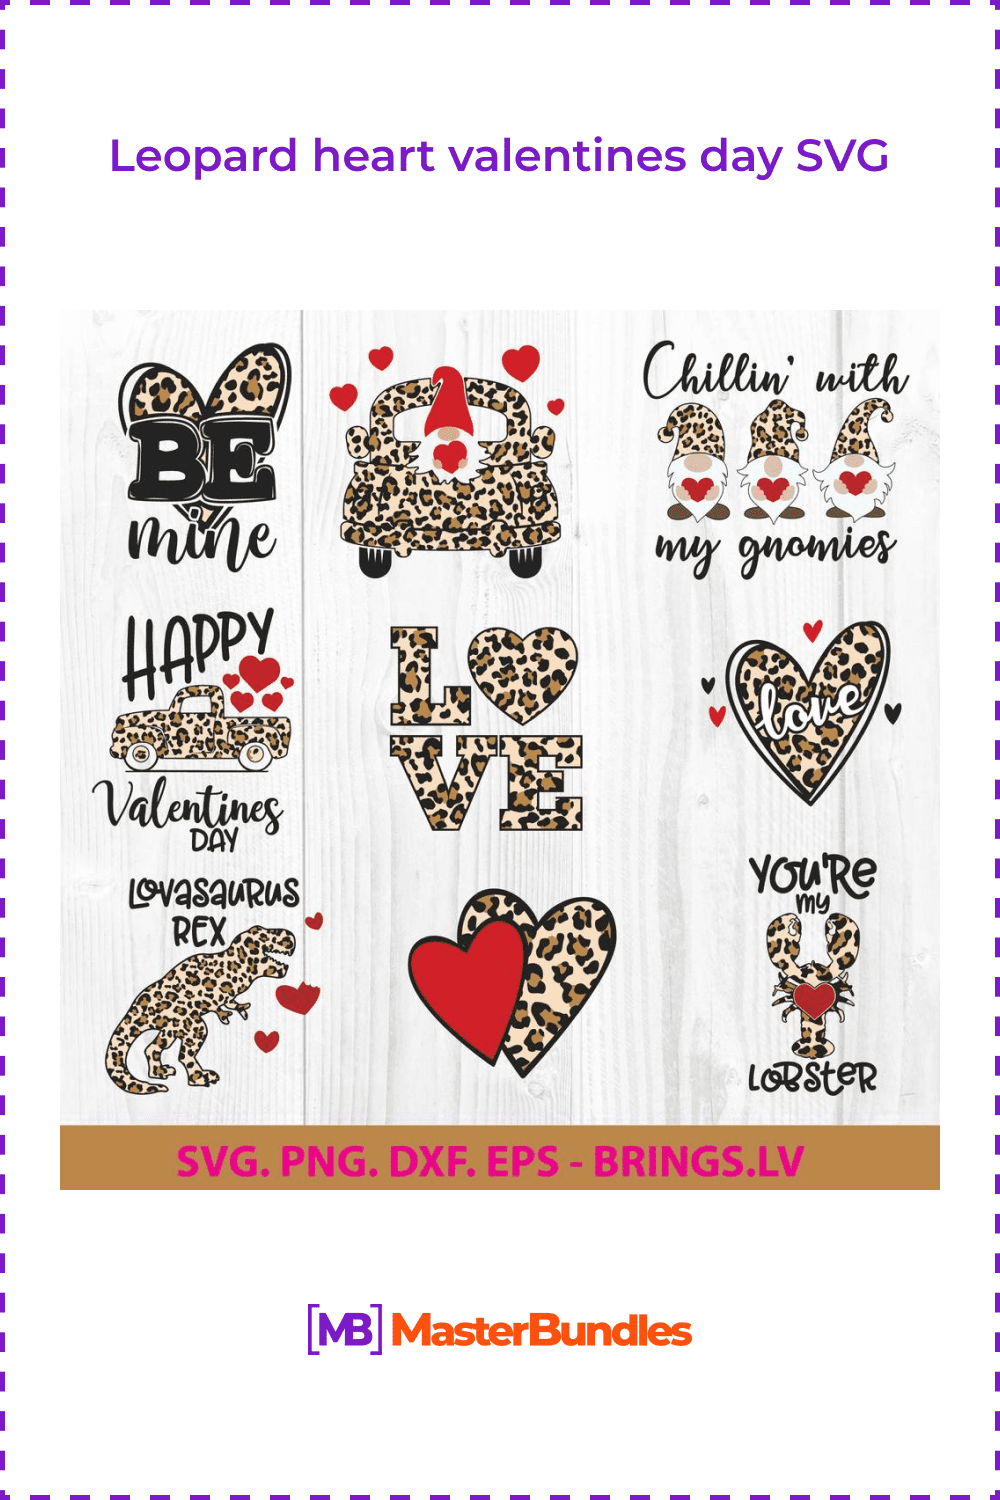 Leopard heart valentines day SVG.